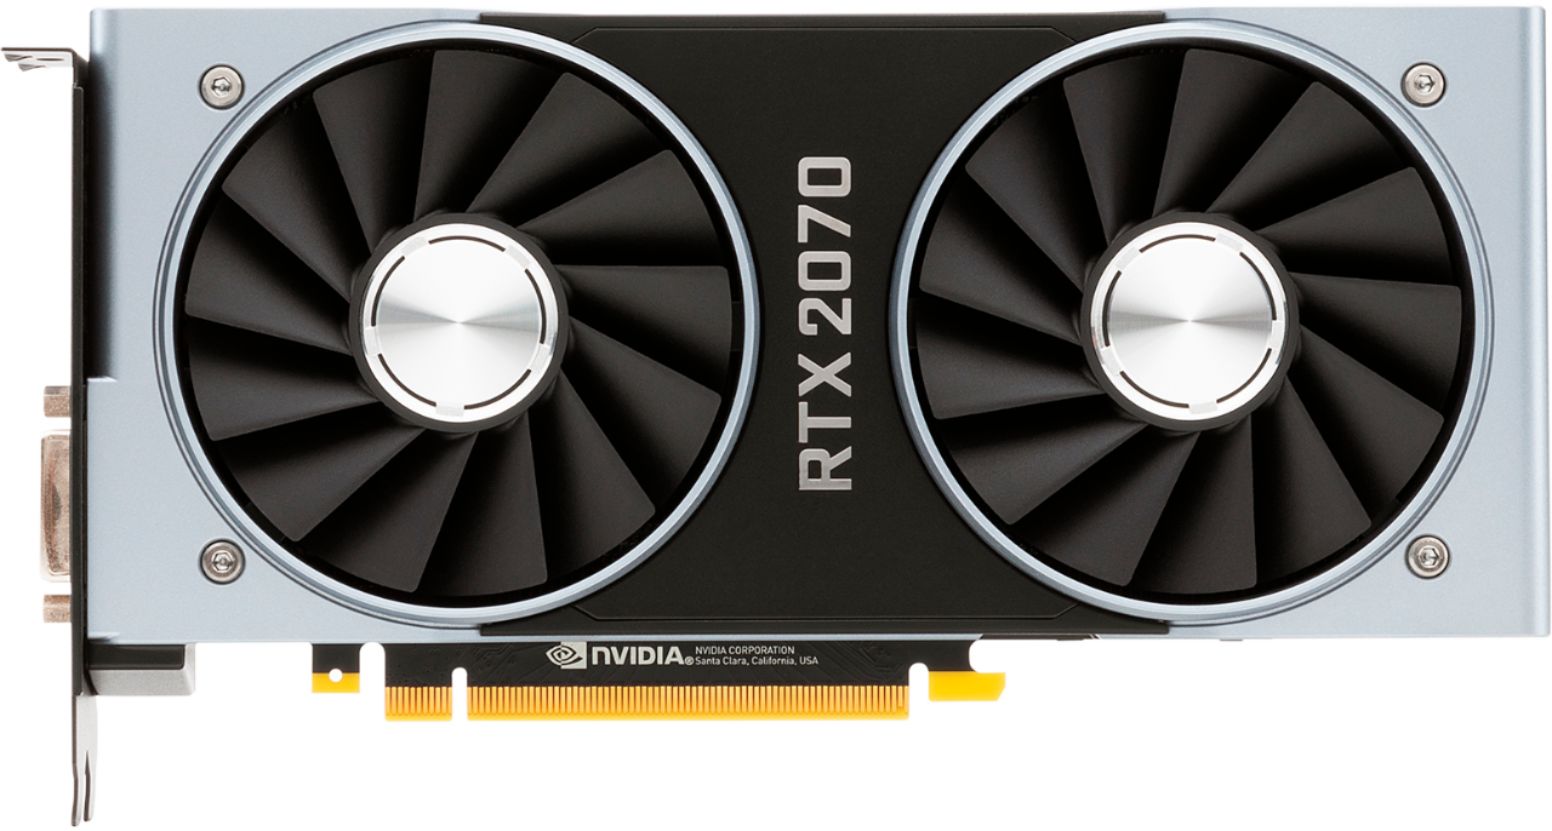 Nvidia GeForce RTX 2070 Super and RTX 